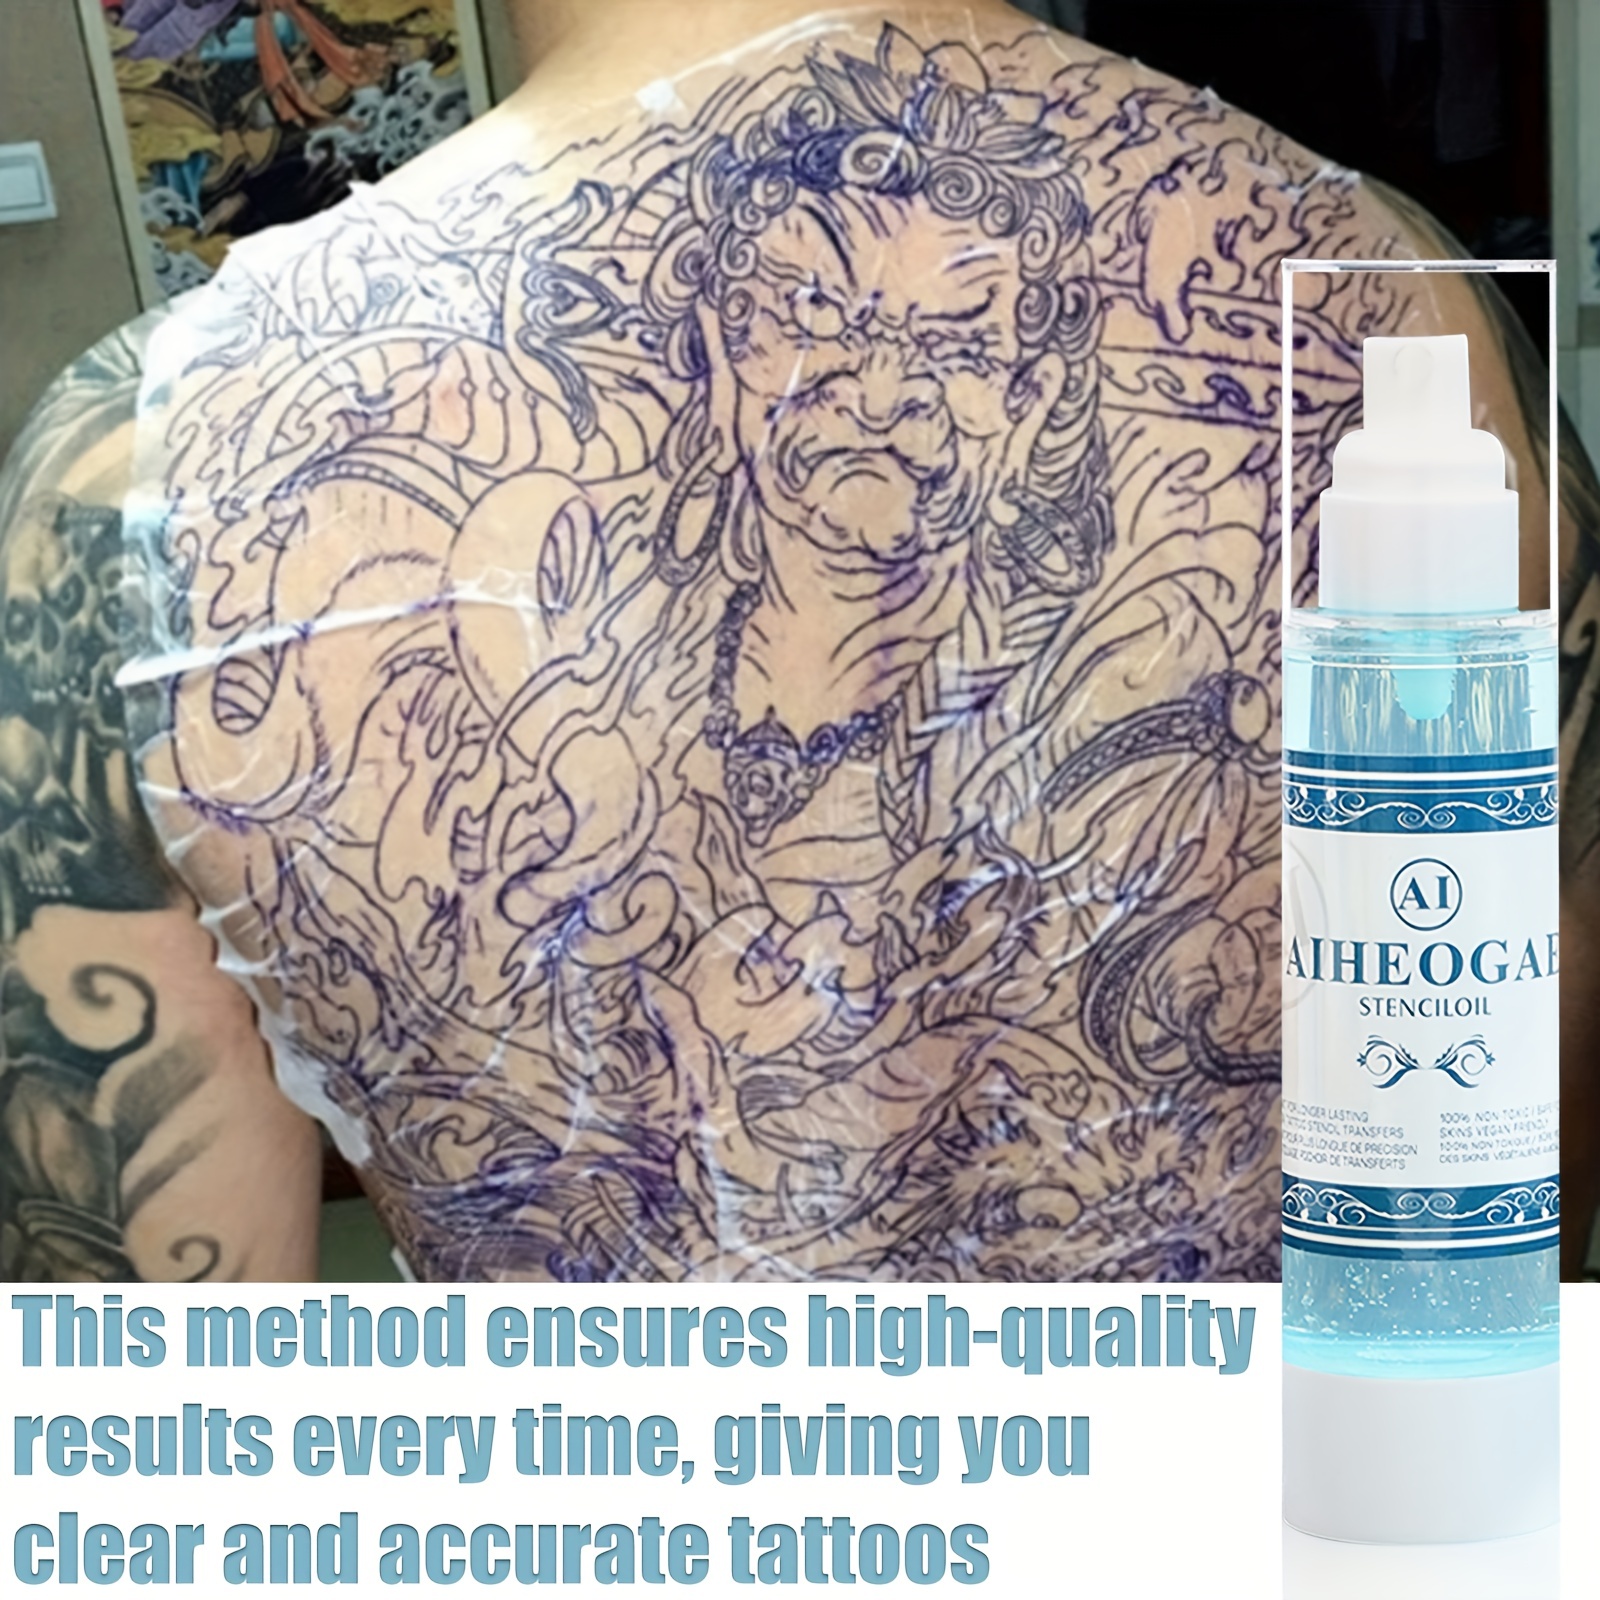 Tattoo Transfer Gel Solution, Tattoo Transfer Stick Ointment For